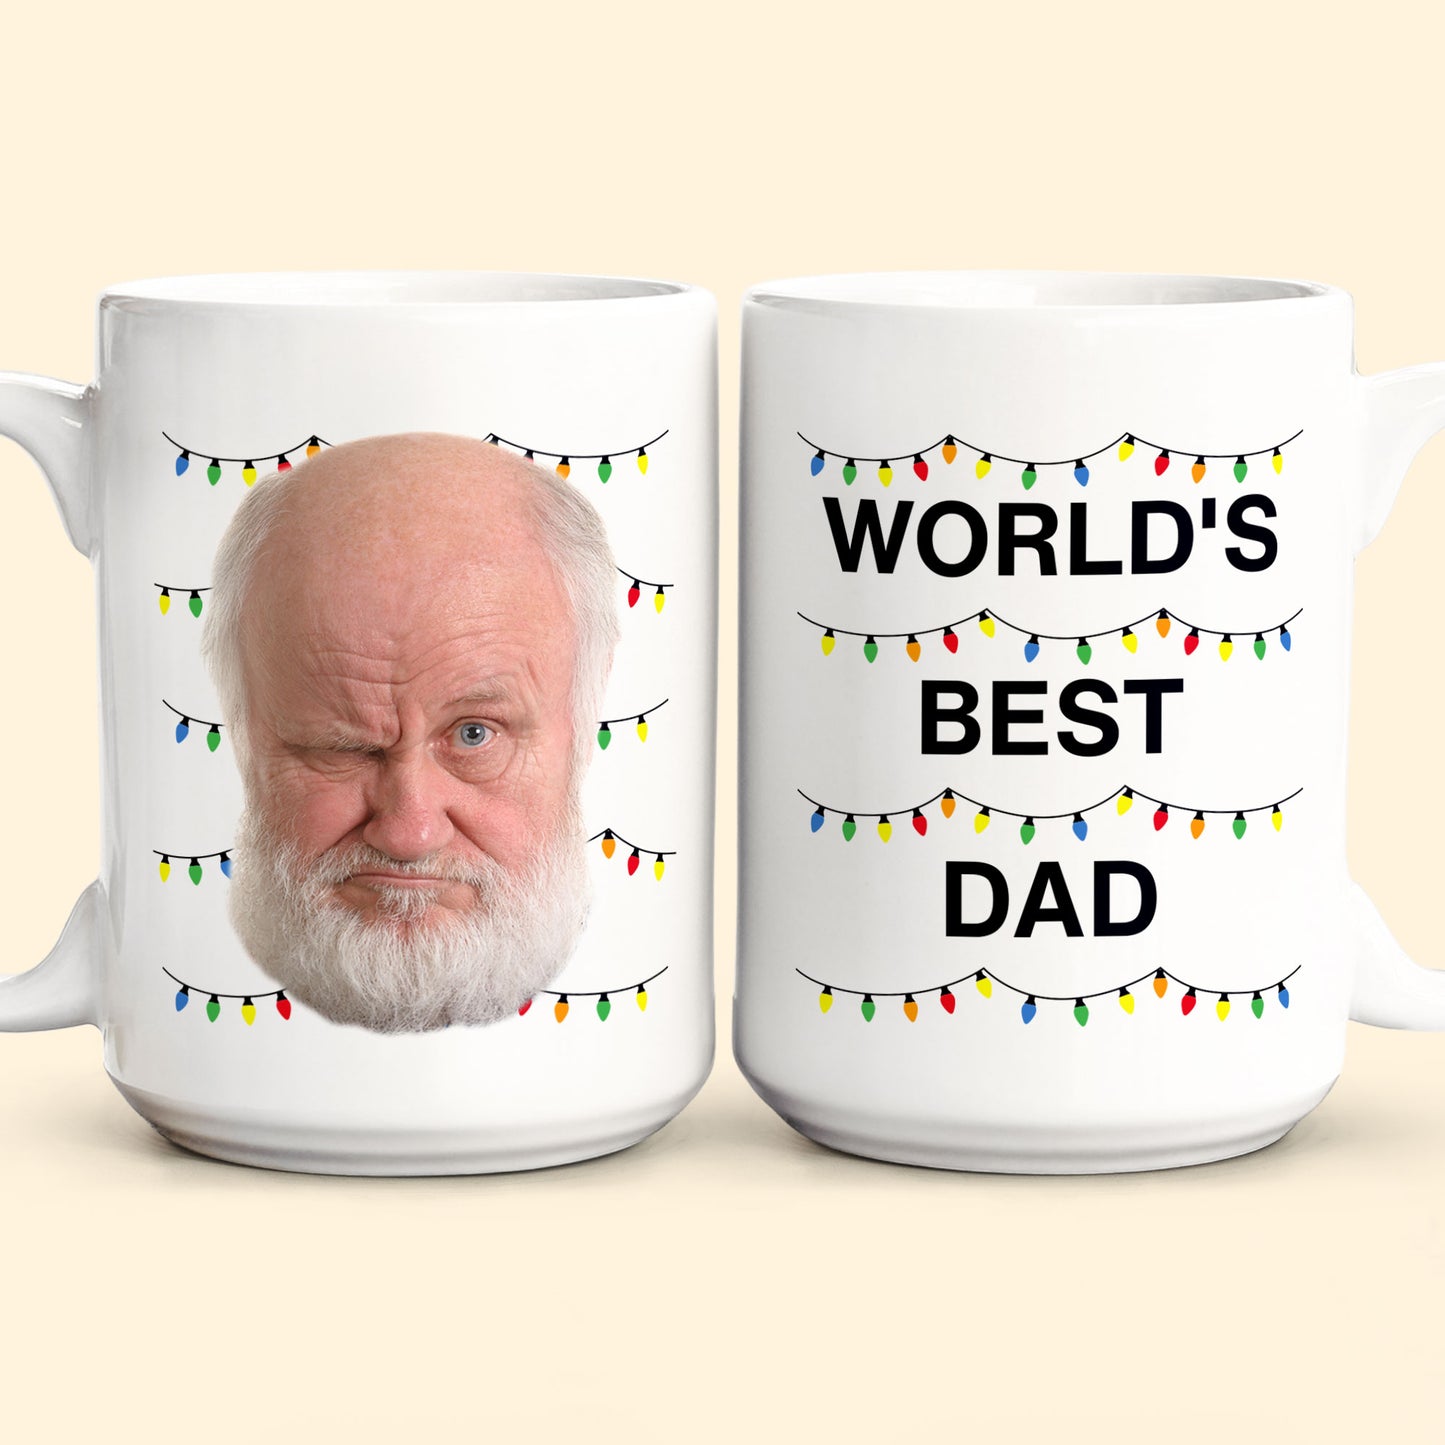 World's Best Dad Funny Custom Face - Personalized Photo Mug